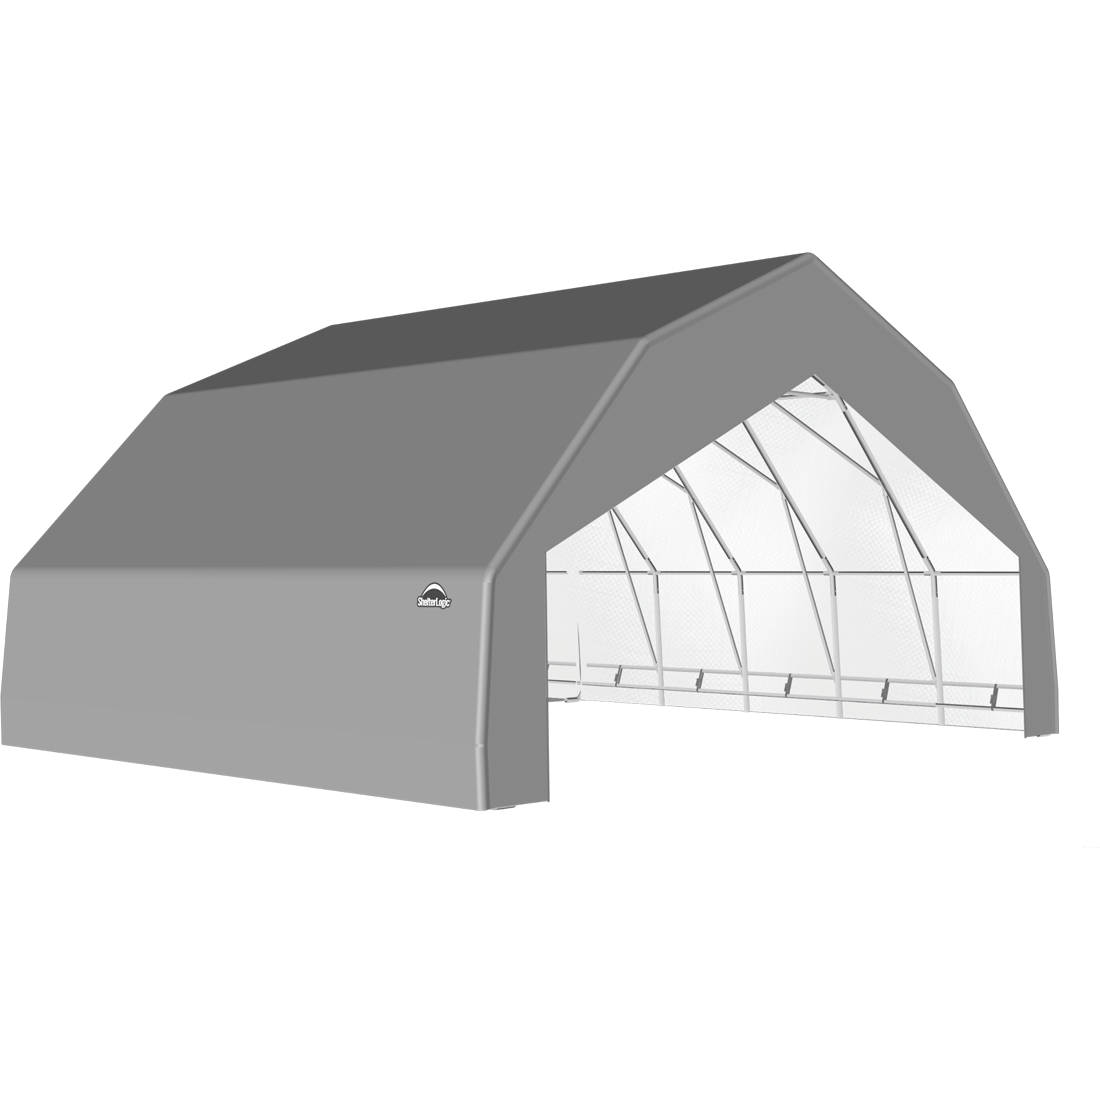 ShelterTech SP Series Barn Shelter, 30 ft. x 20 ft. x 15 ft. Heavy Duty PVC 14.5 oz. Gray